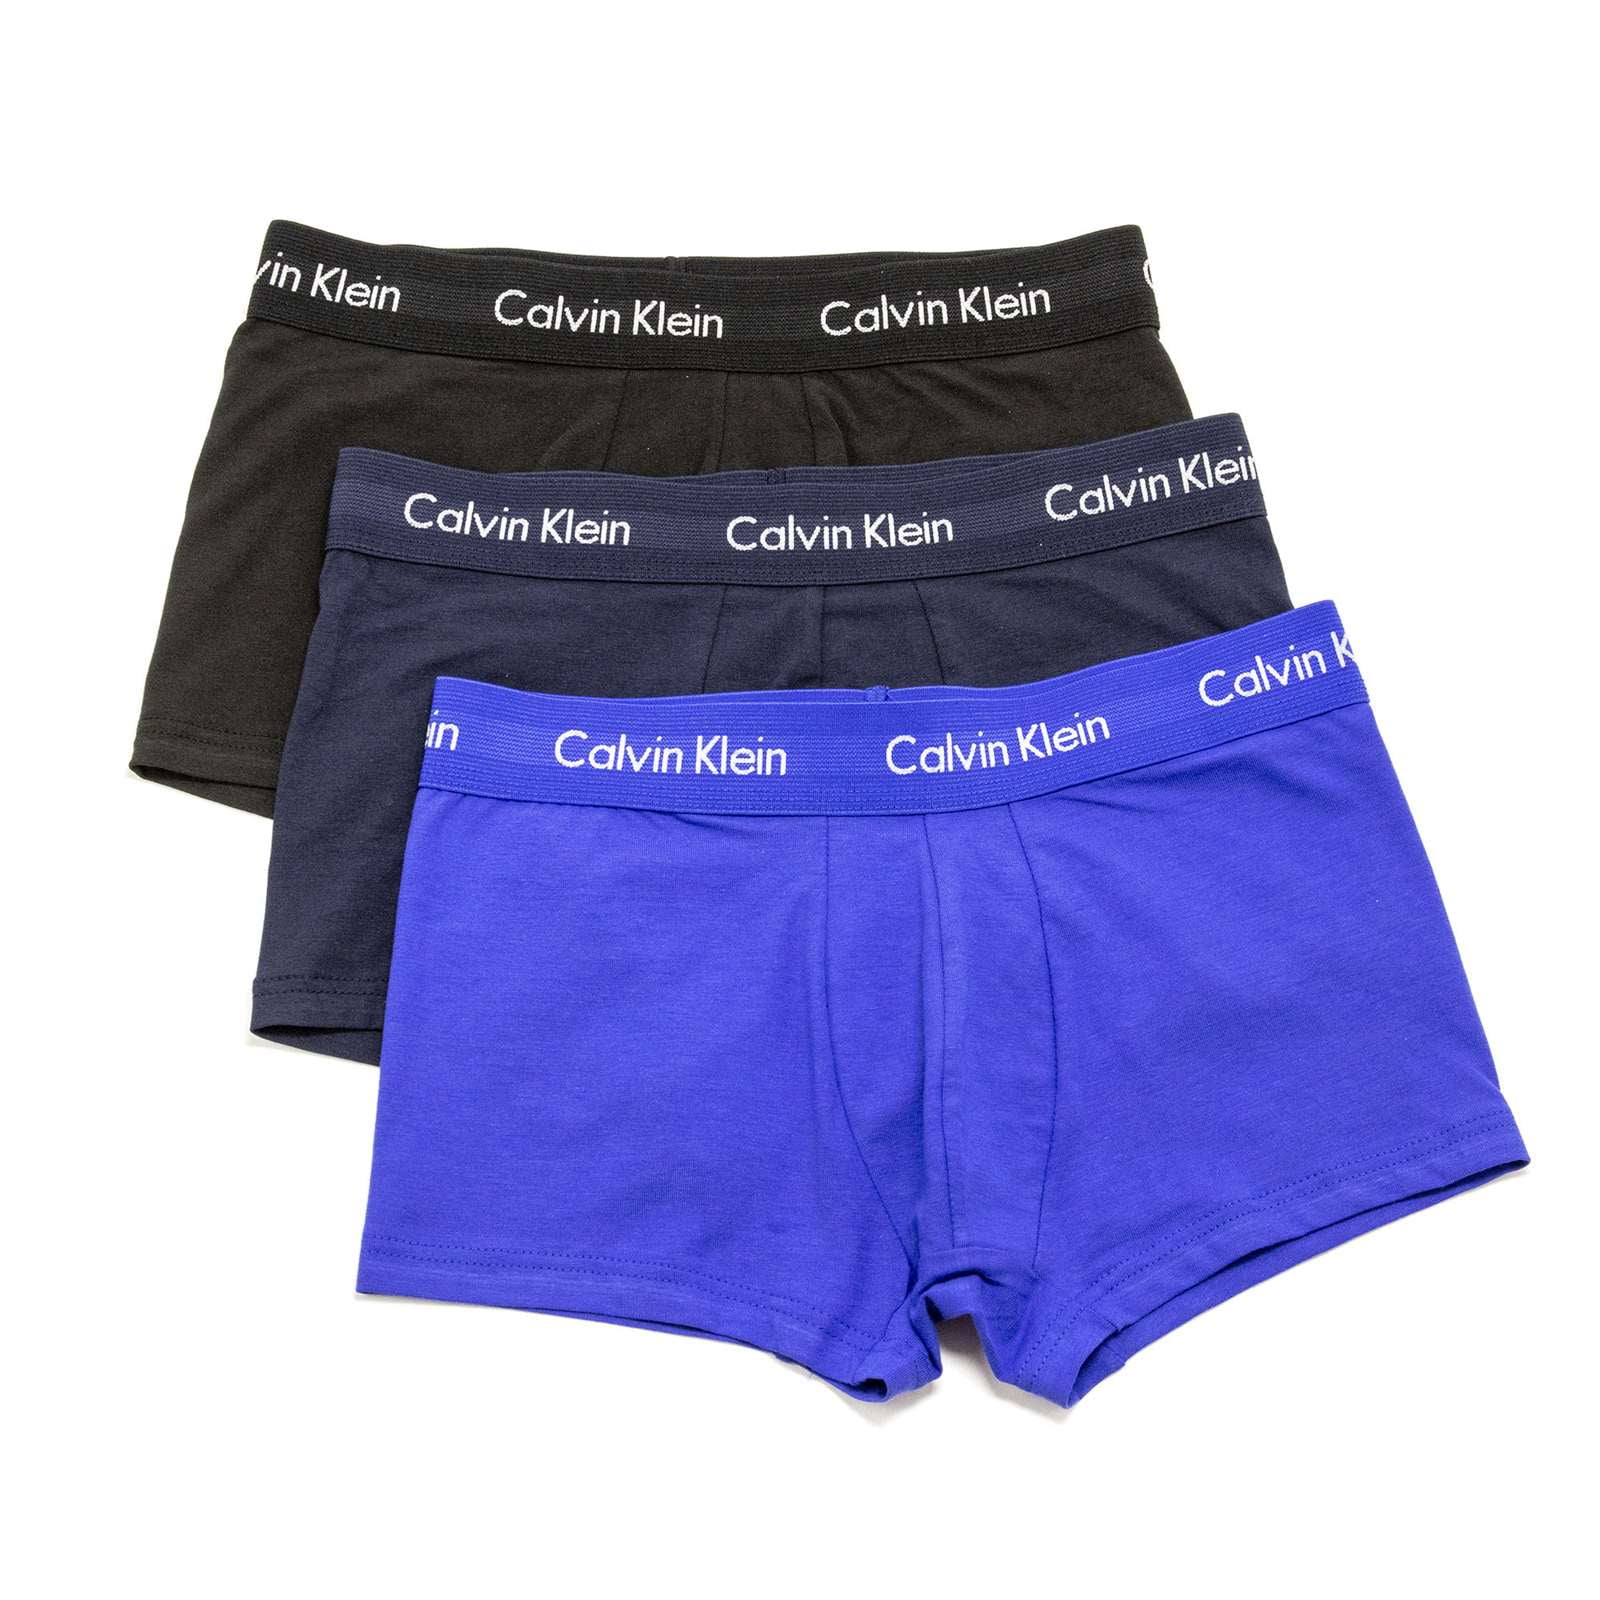 Calvin Klein Men's Cotton Stretch Low Rise 3-Pack Trunk Set, Black